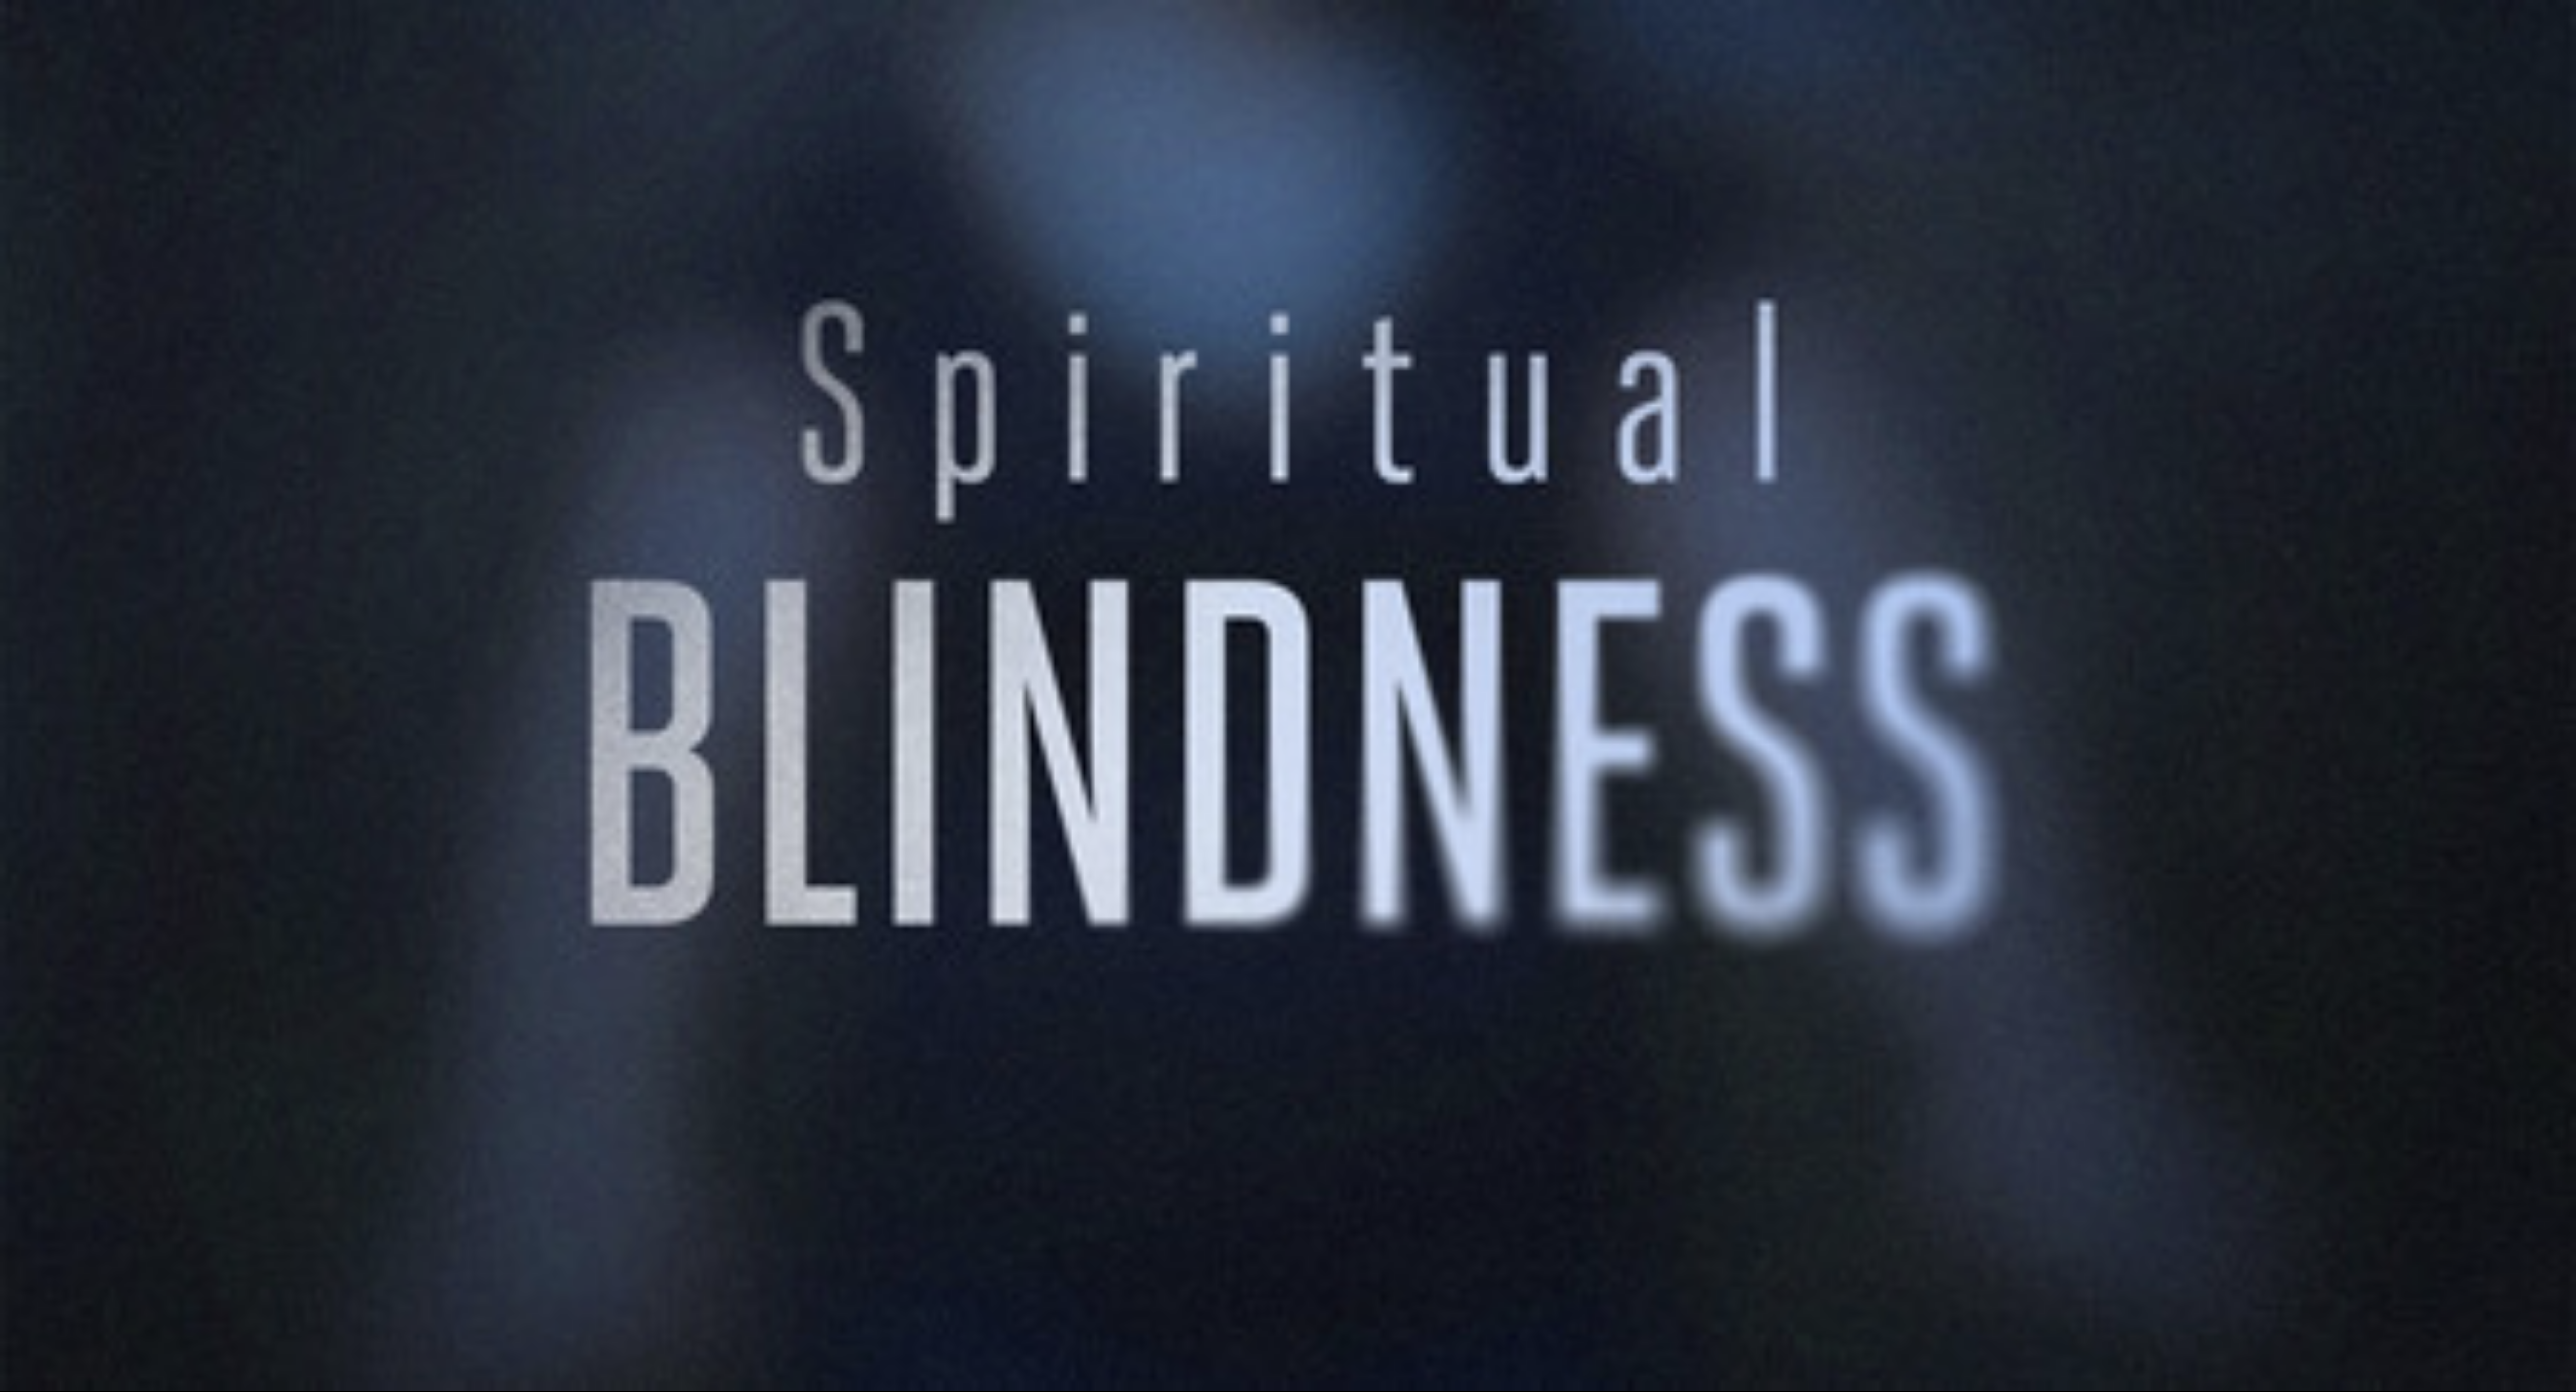 Spiritual Blindness